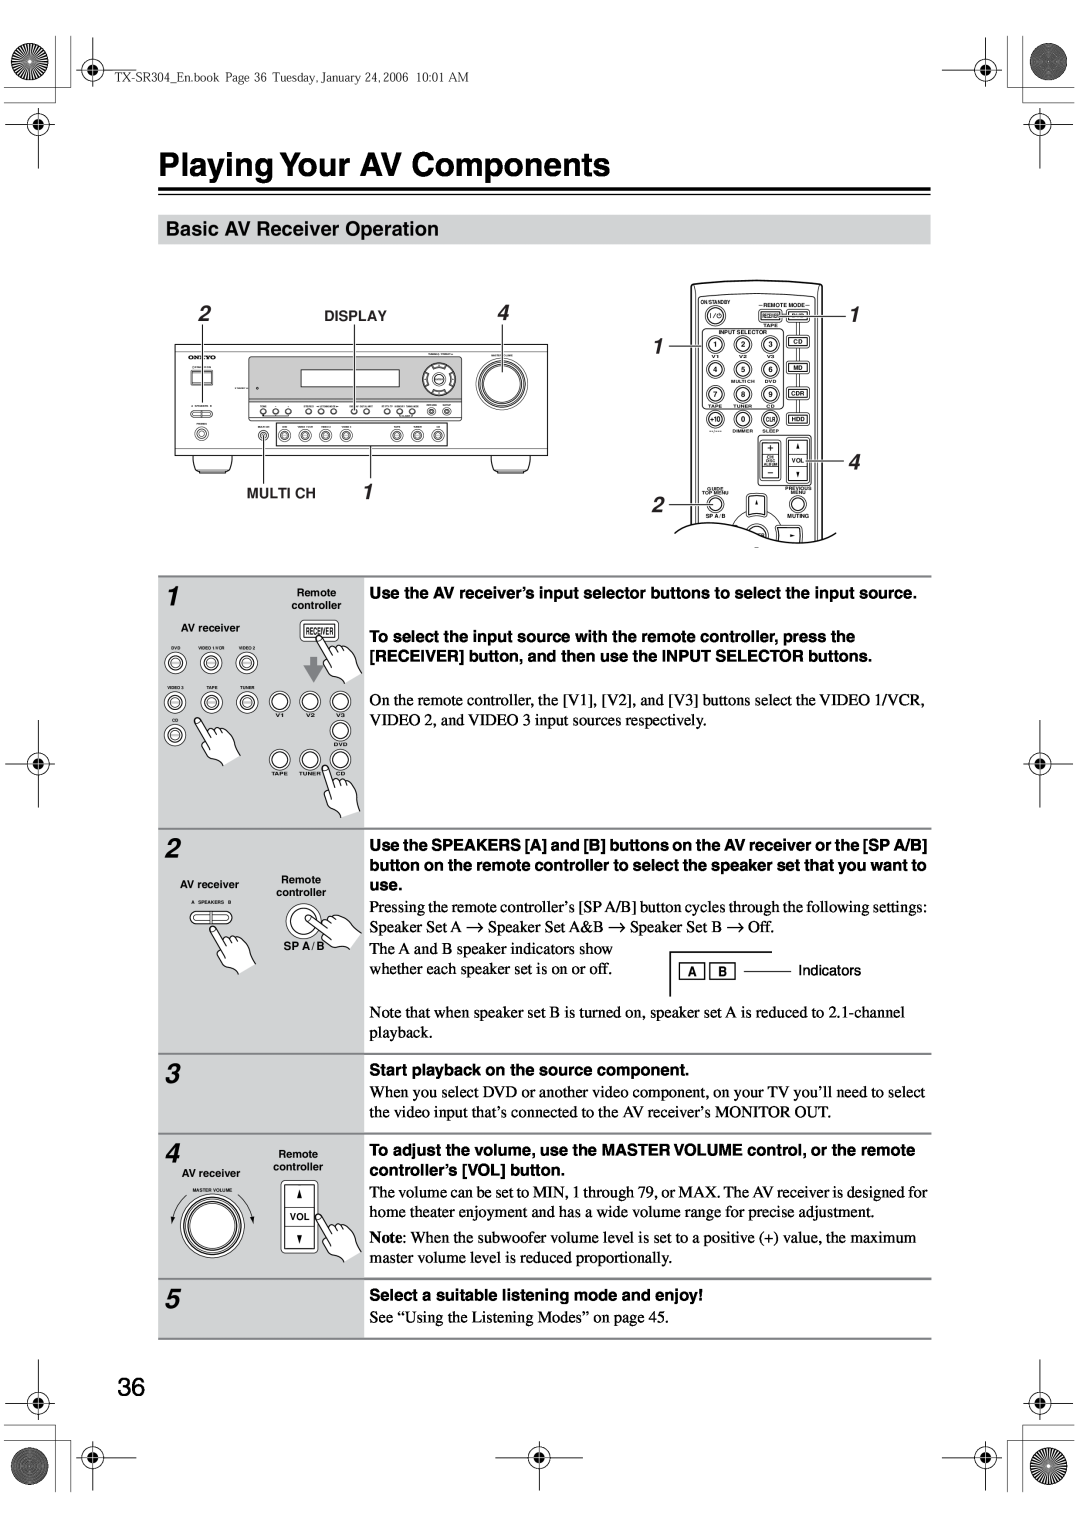 Onkyo TX-SR8440, TX-SR404, TX-SR304E instruction manual Playing Your AV Components, Basic AV Receiver Operation 